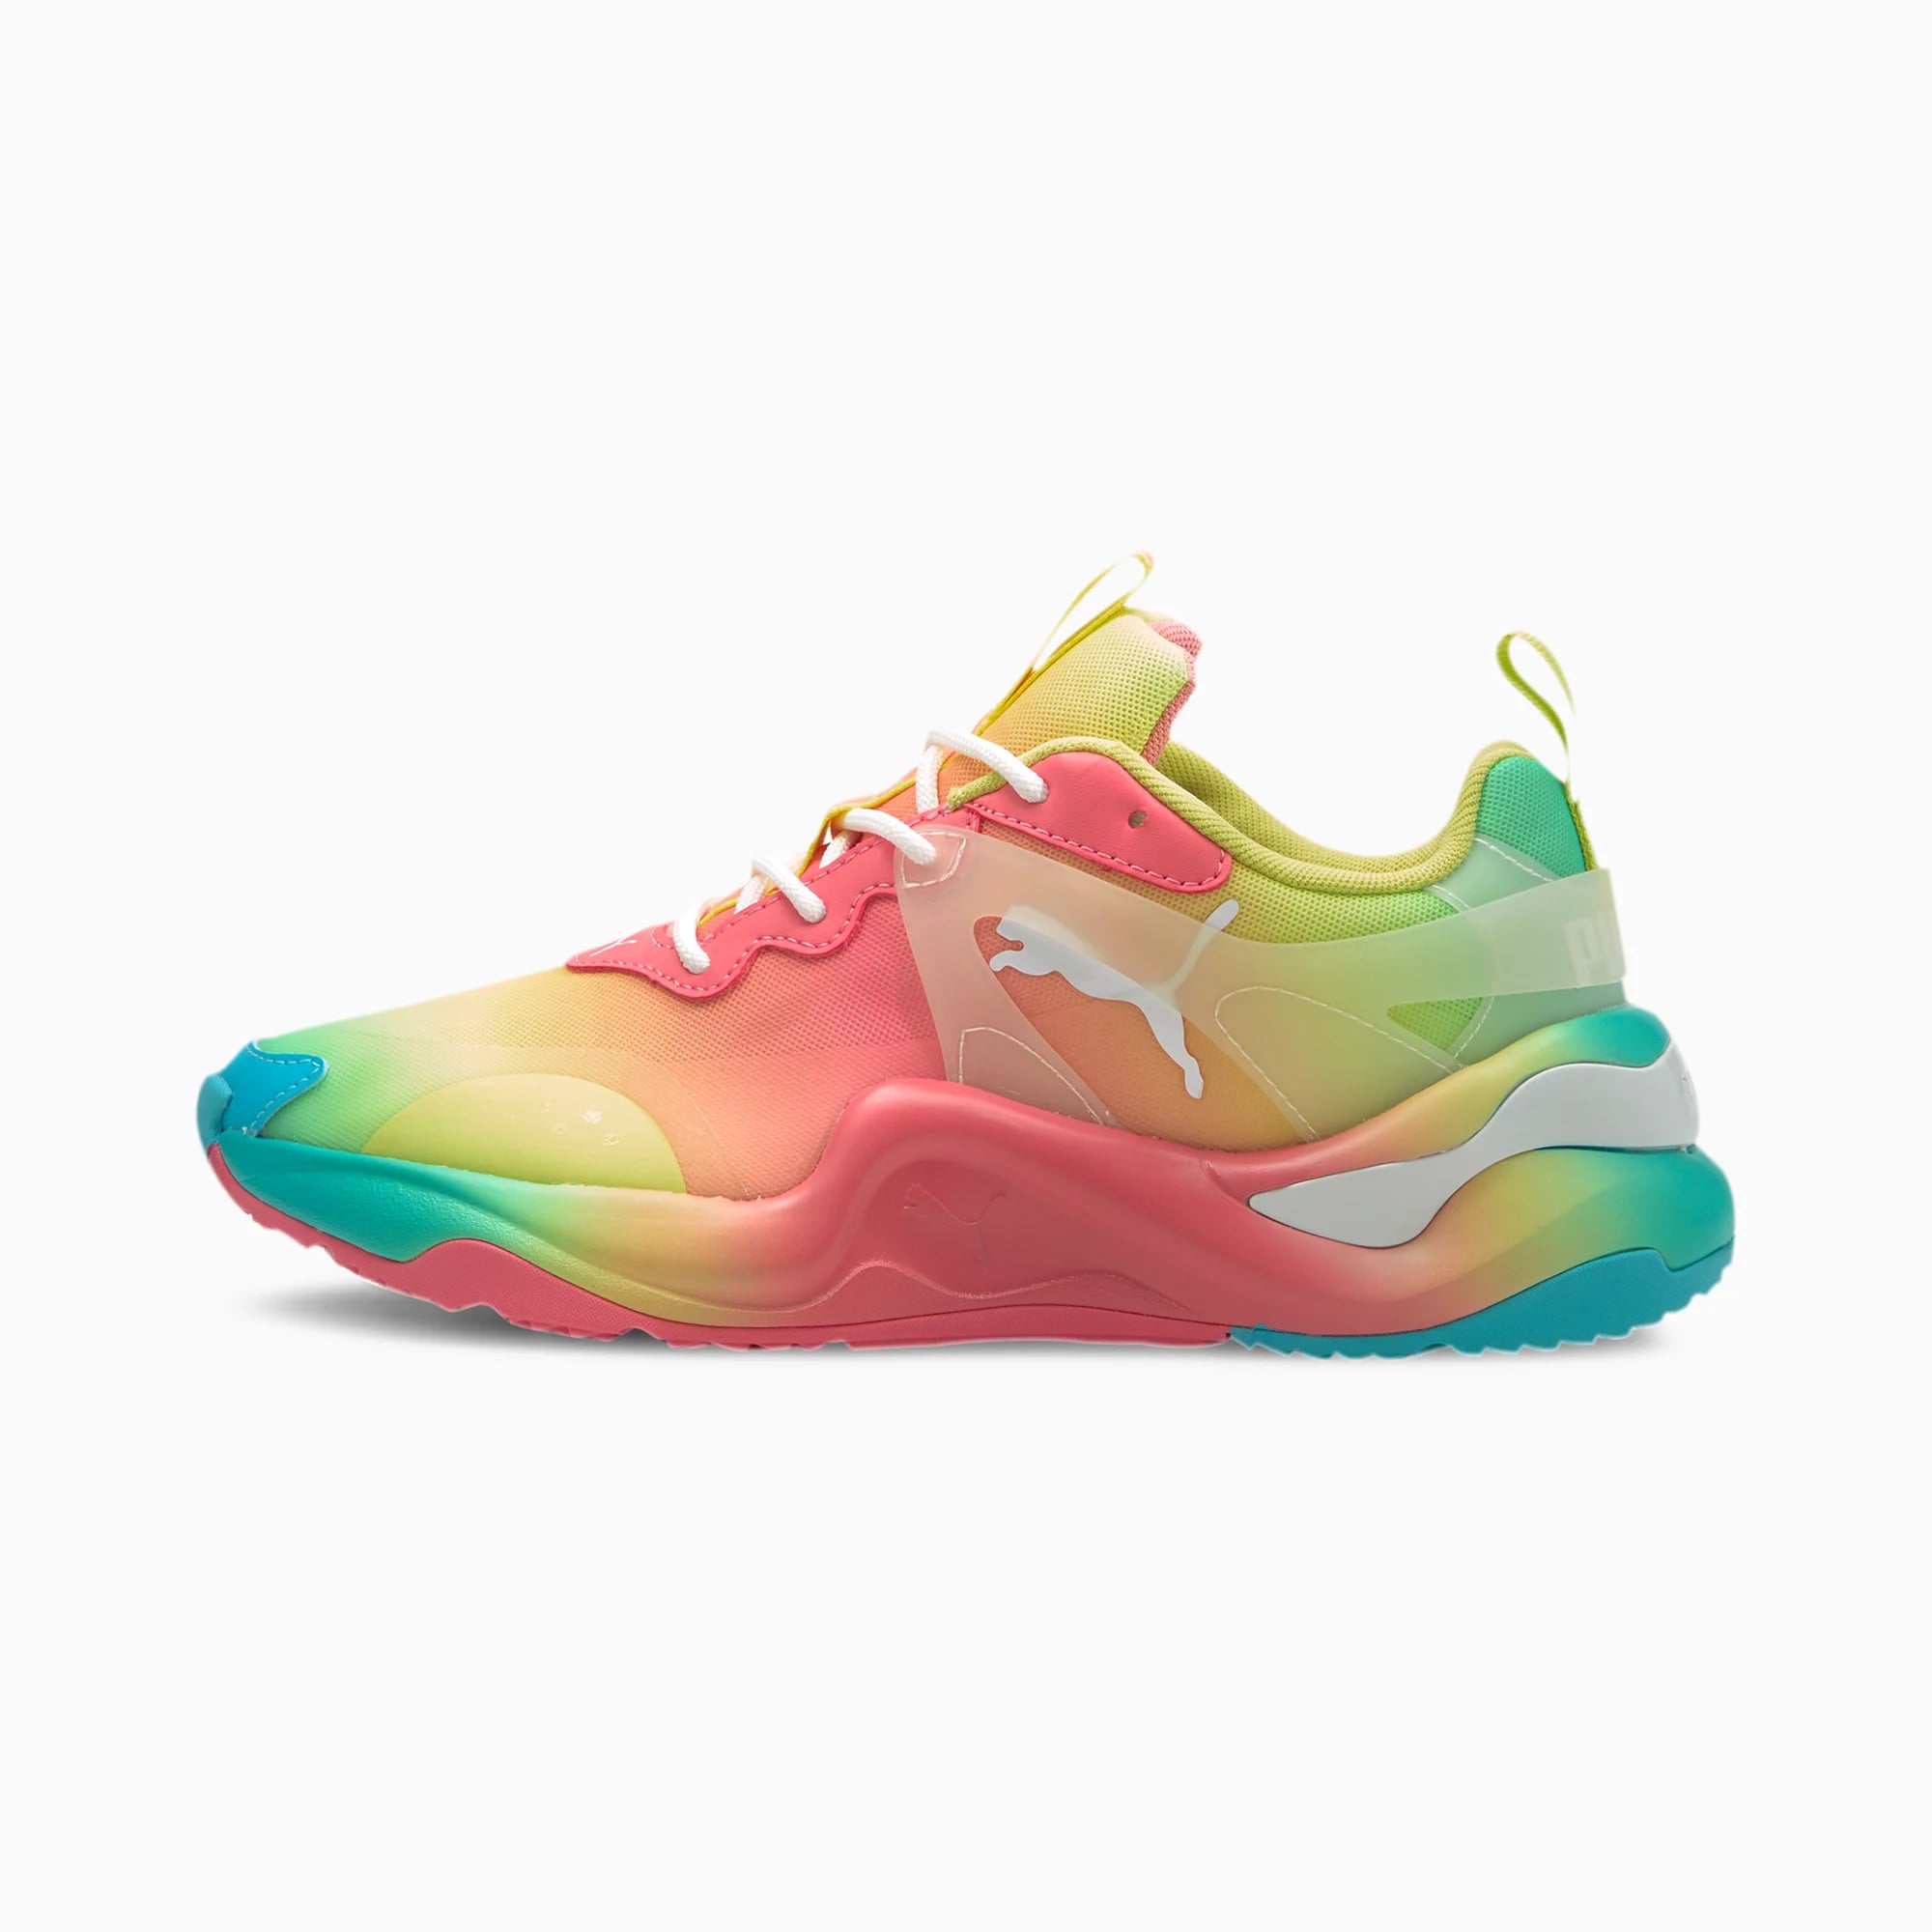 colorful pumas shoes